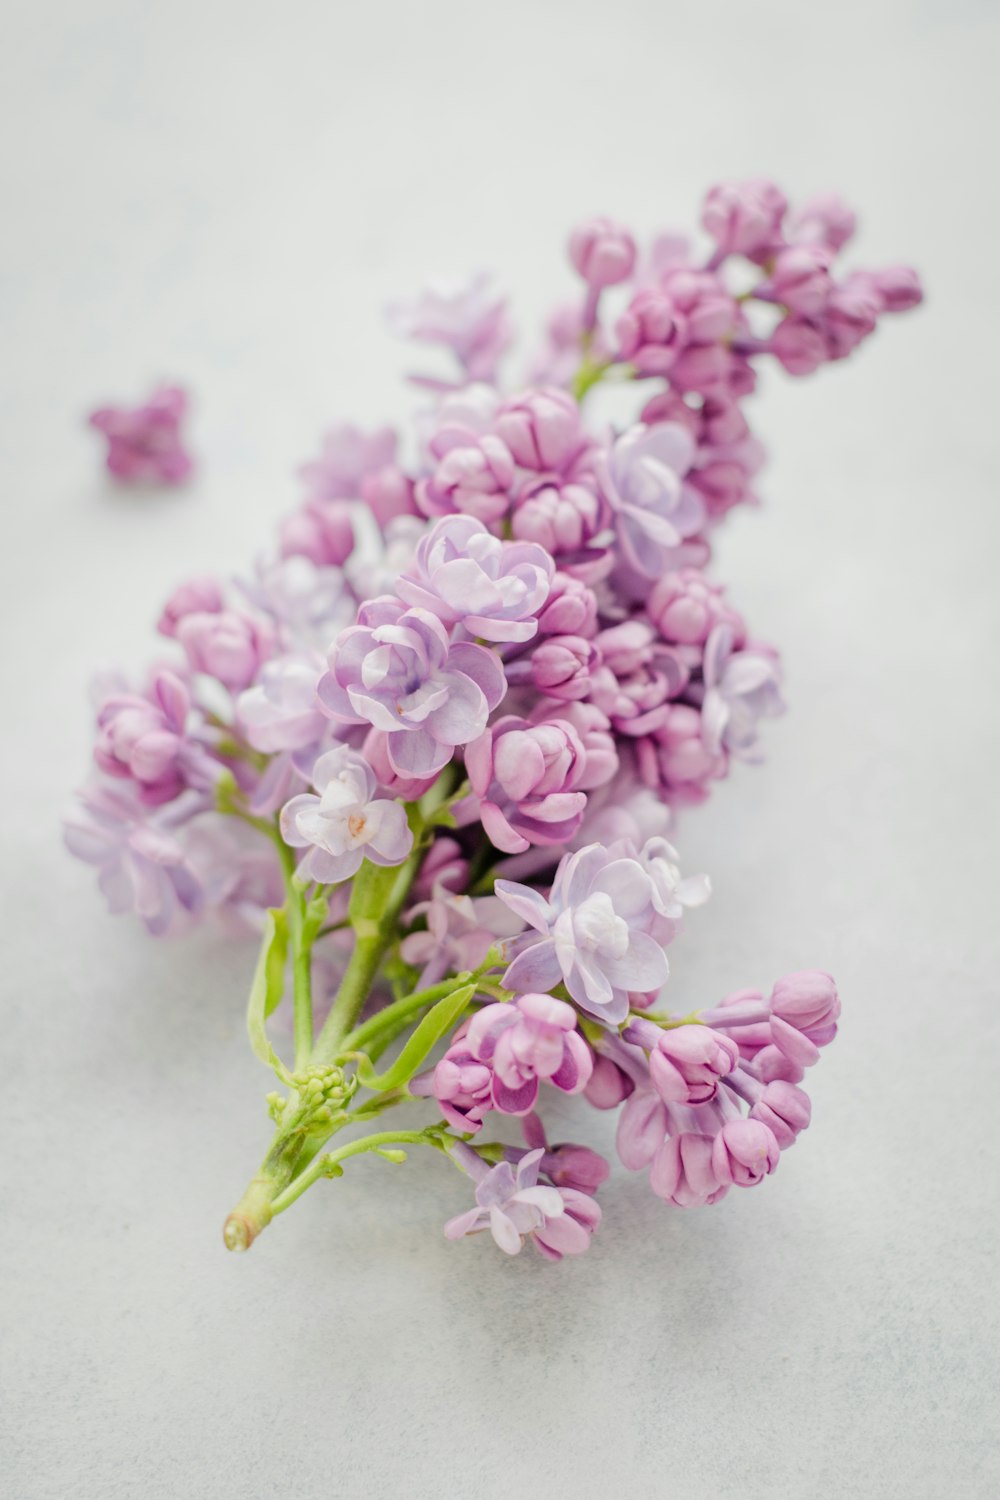 Flor de pétalos de racimo rosado sobre superficie gris